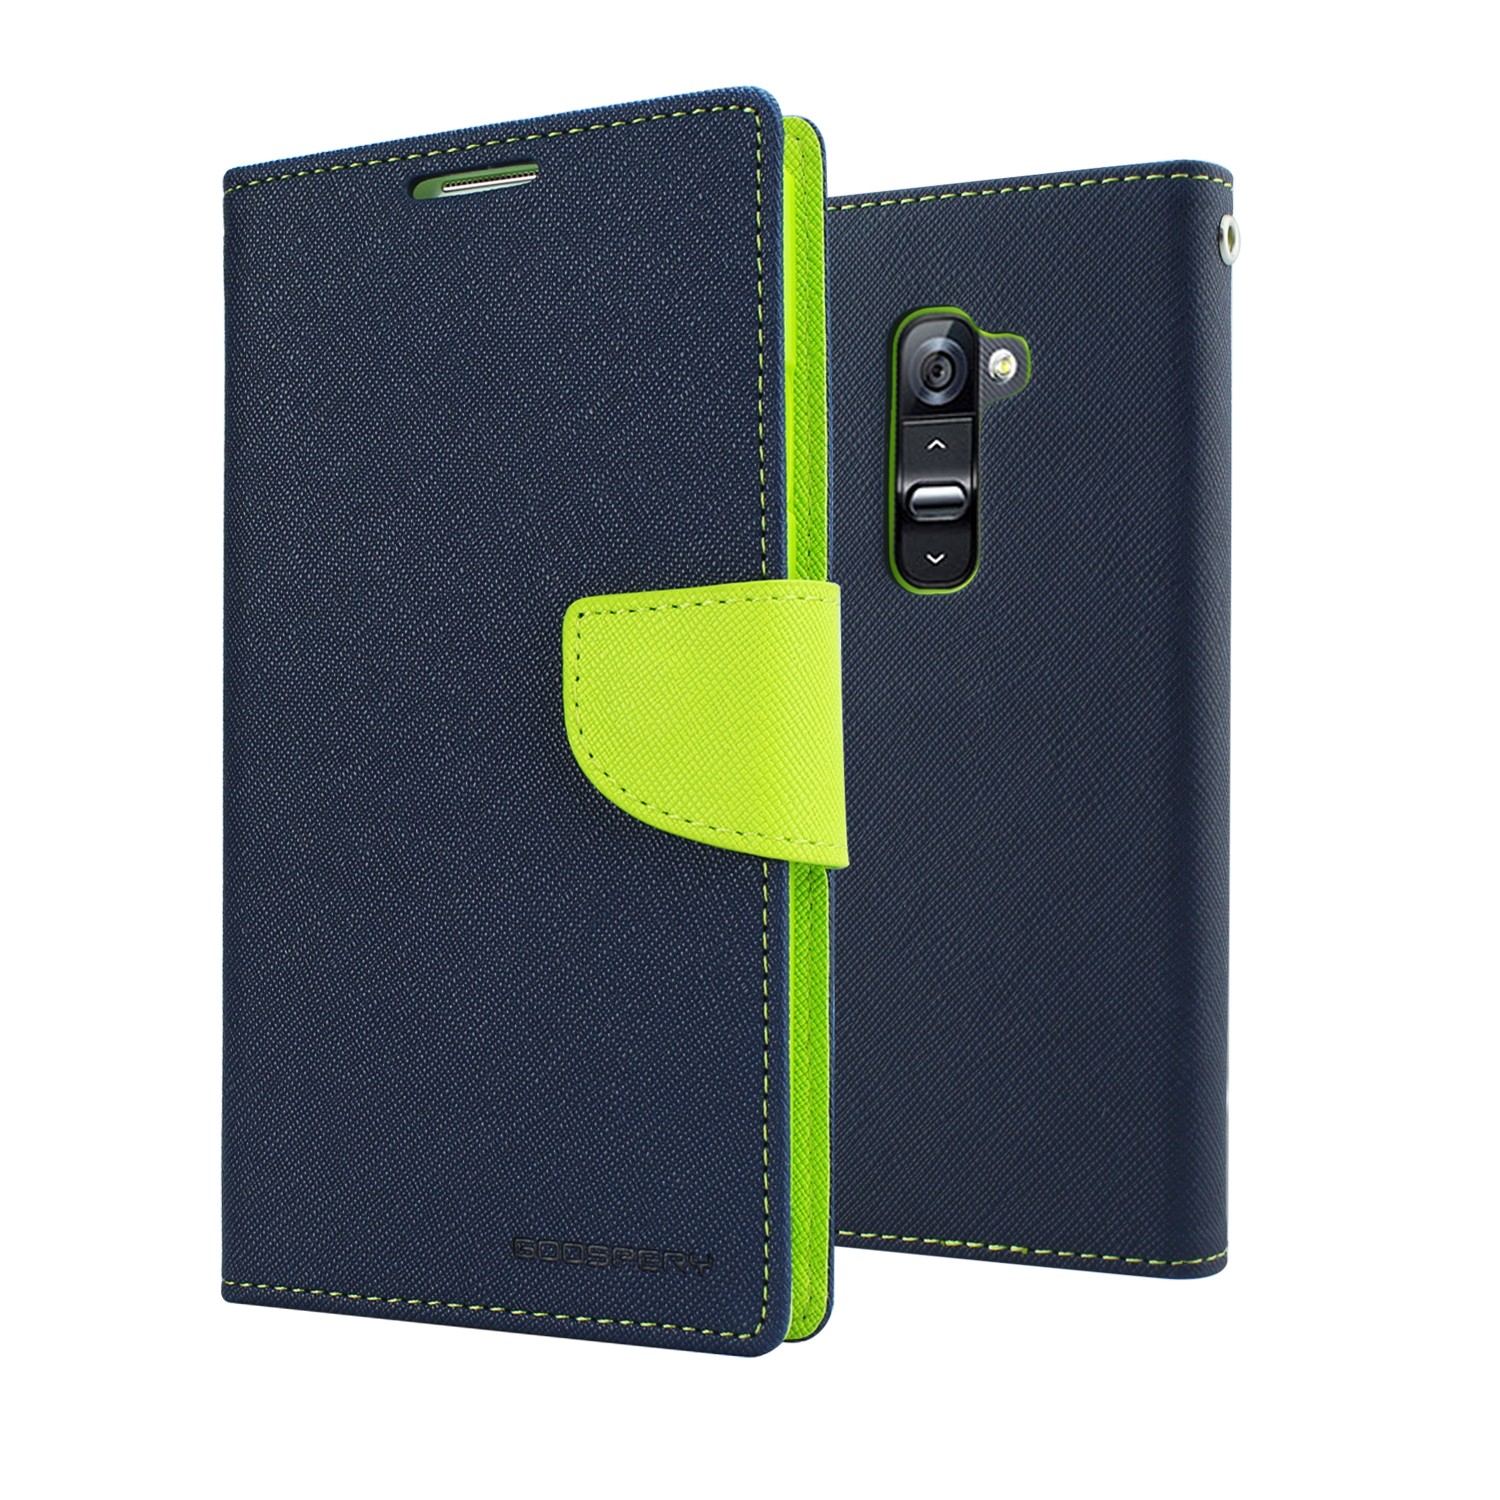 Flipové pouzdro pro Samsung Galaxy S7 Mercury Fancy Diary modro/limetkové